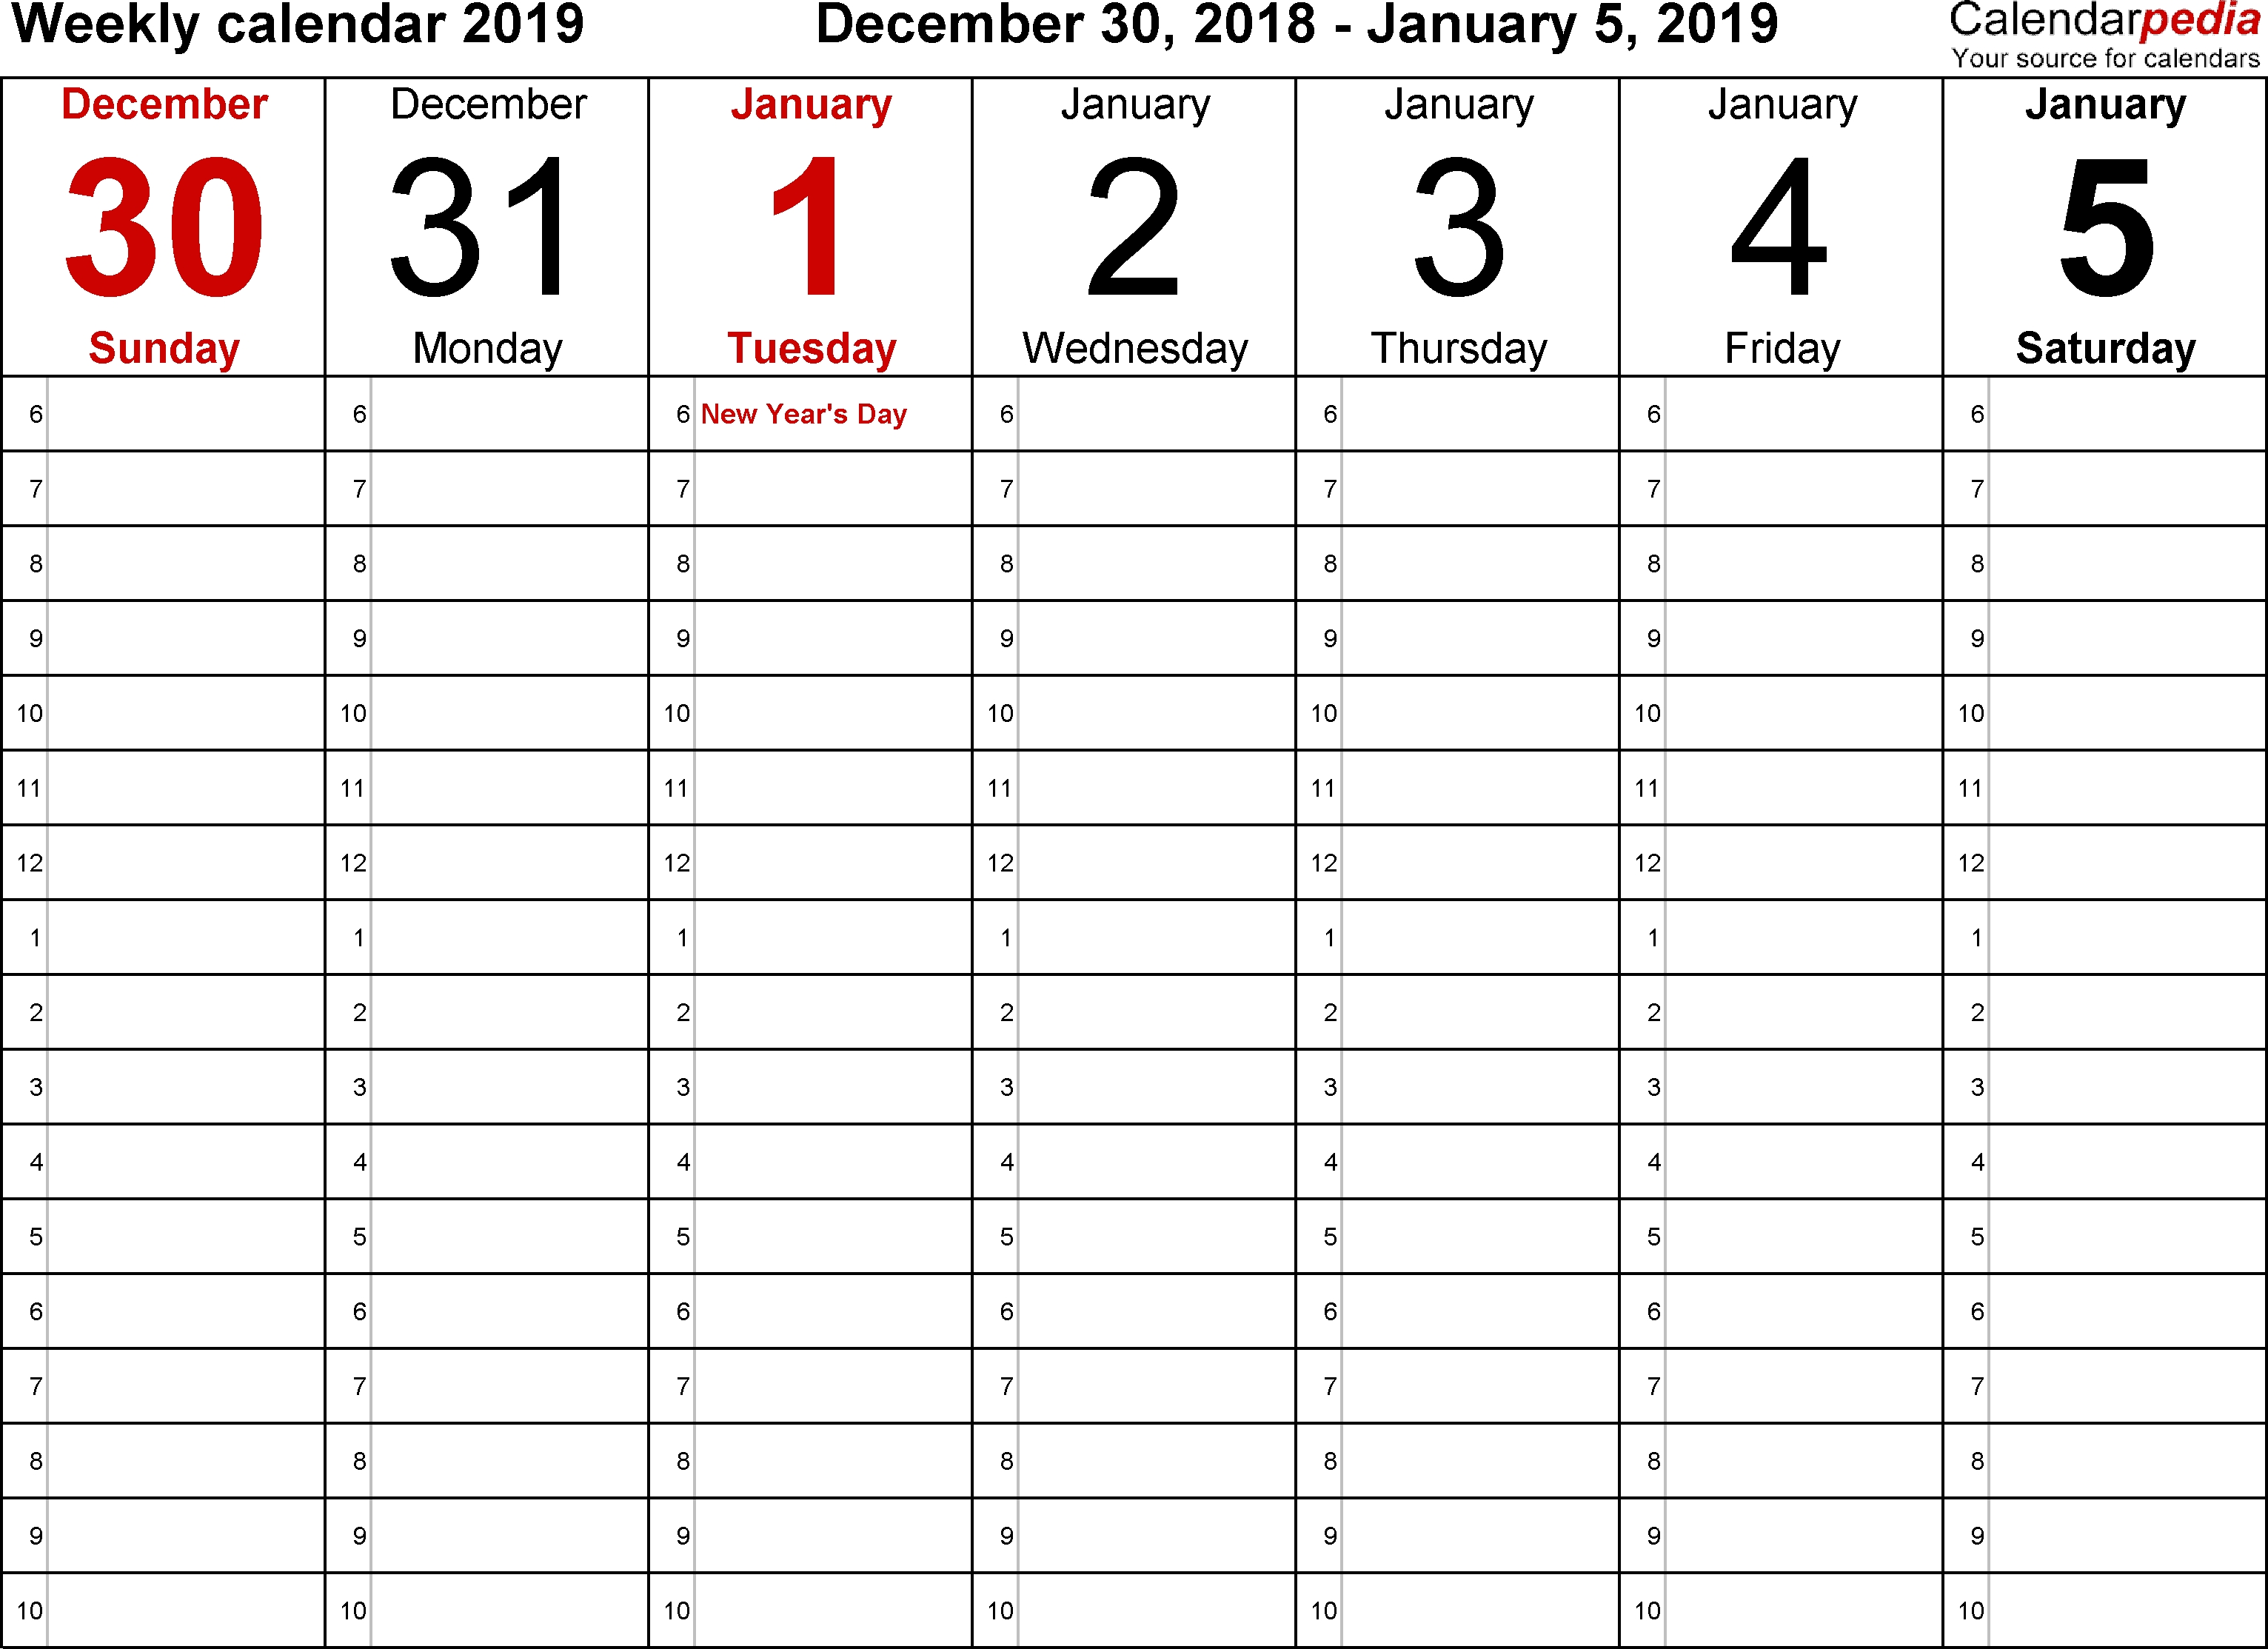 Weekly Calendar 2019 For Word - 12 Free Printable Templates with Free Printable 30 Day Calendars